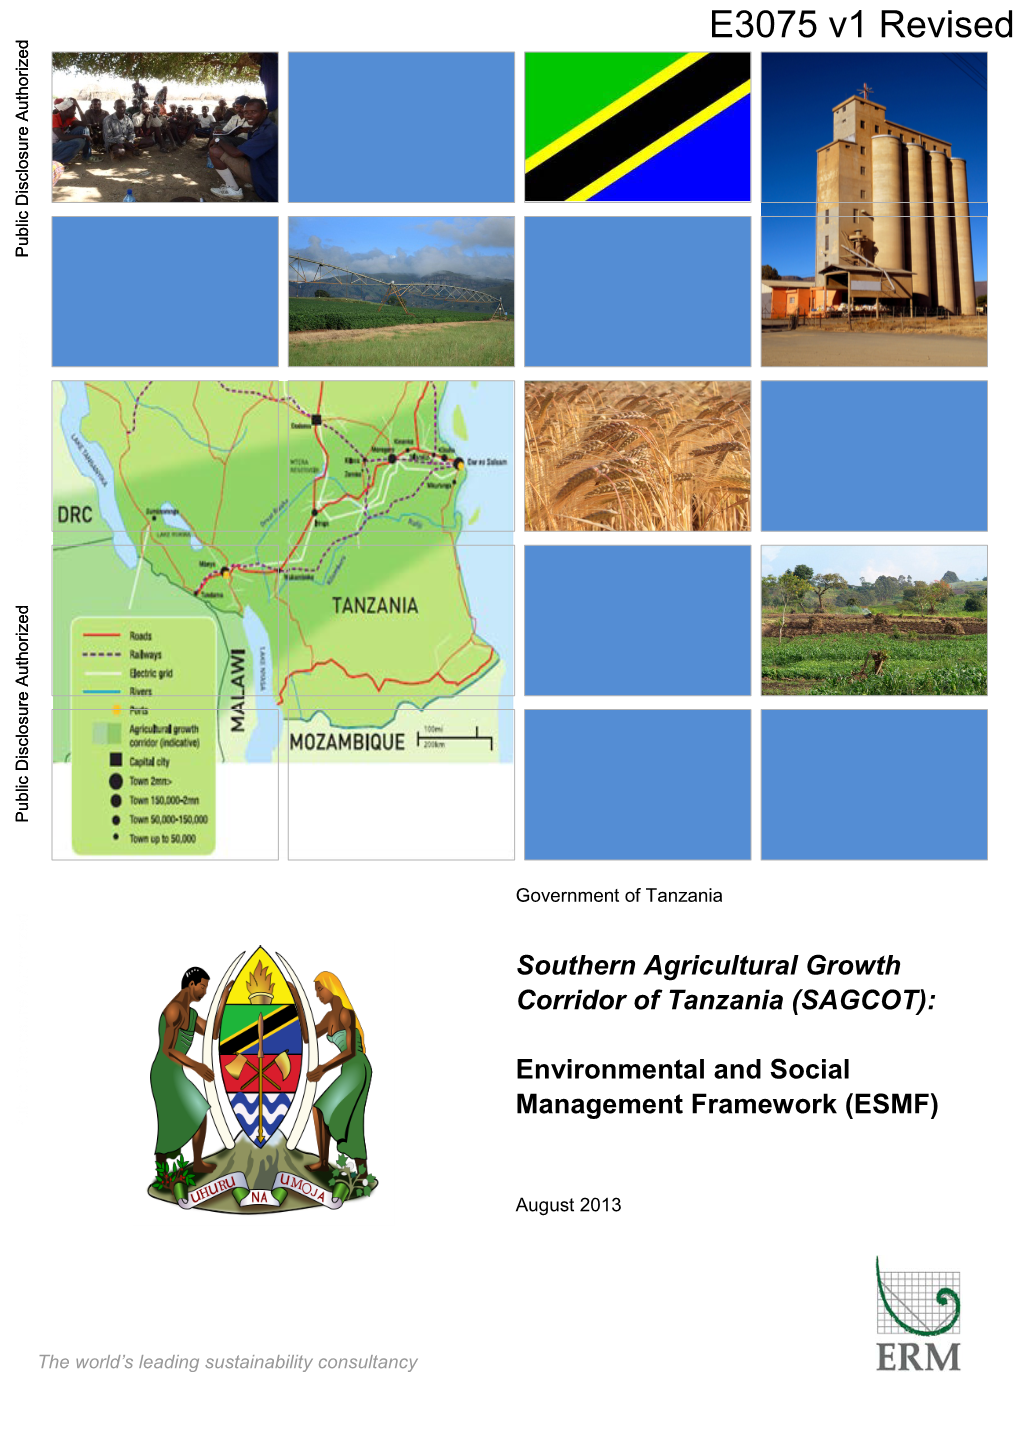 Southern Agricultural Growth Corridor of Tanzania (SAGCOT)